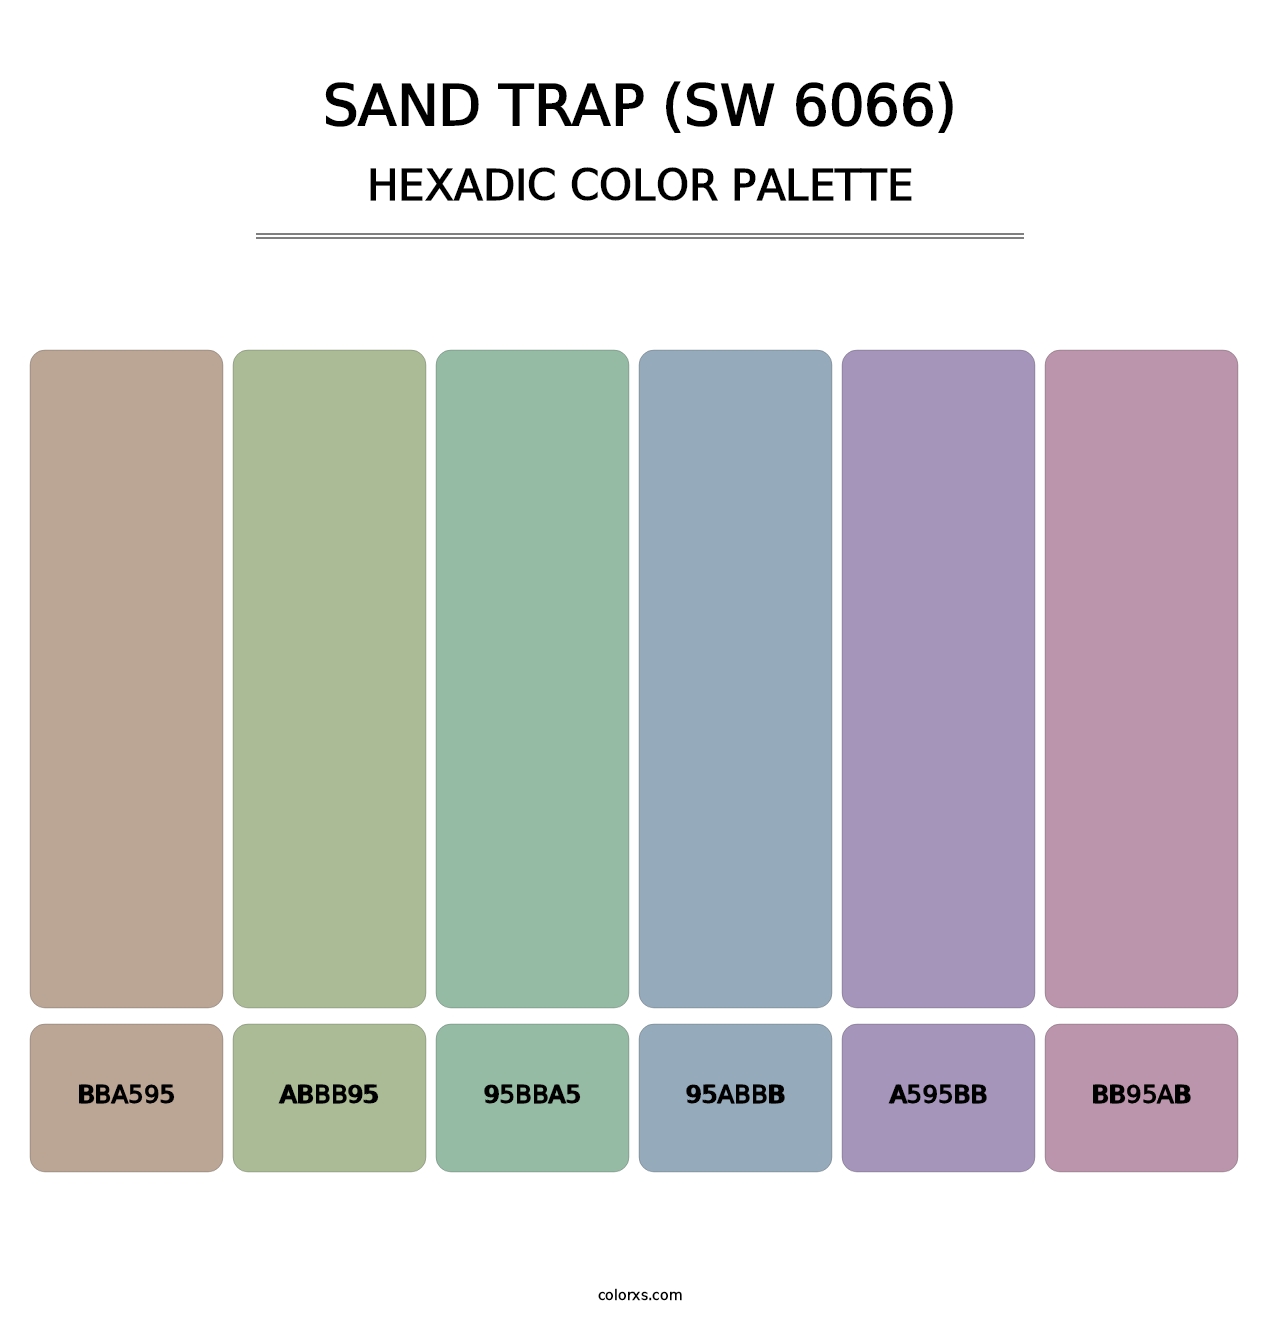 Sand Trap (SW 6066) - Hexadic Color Palette